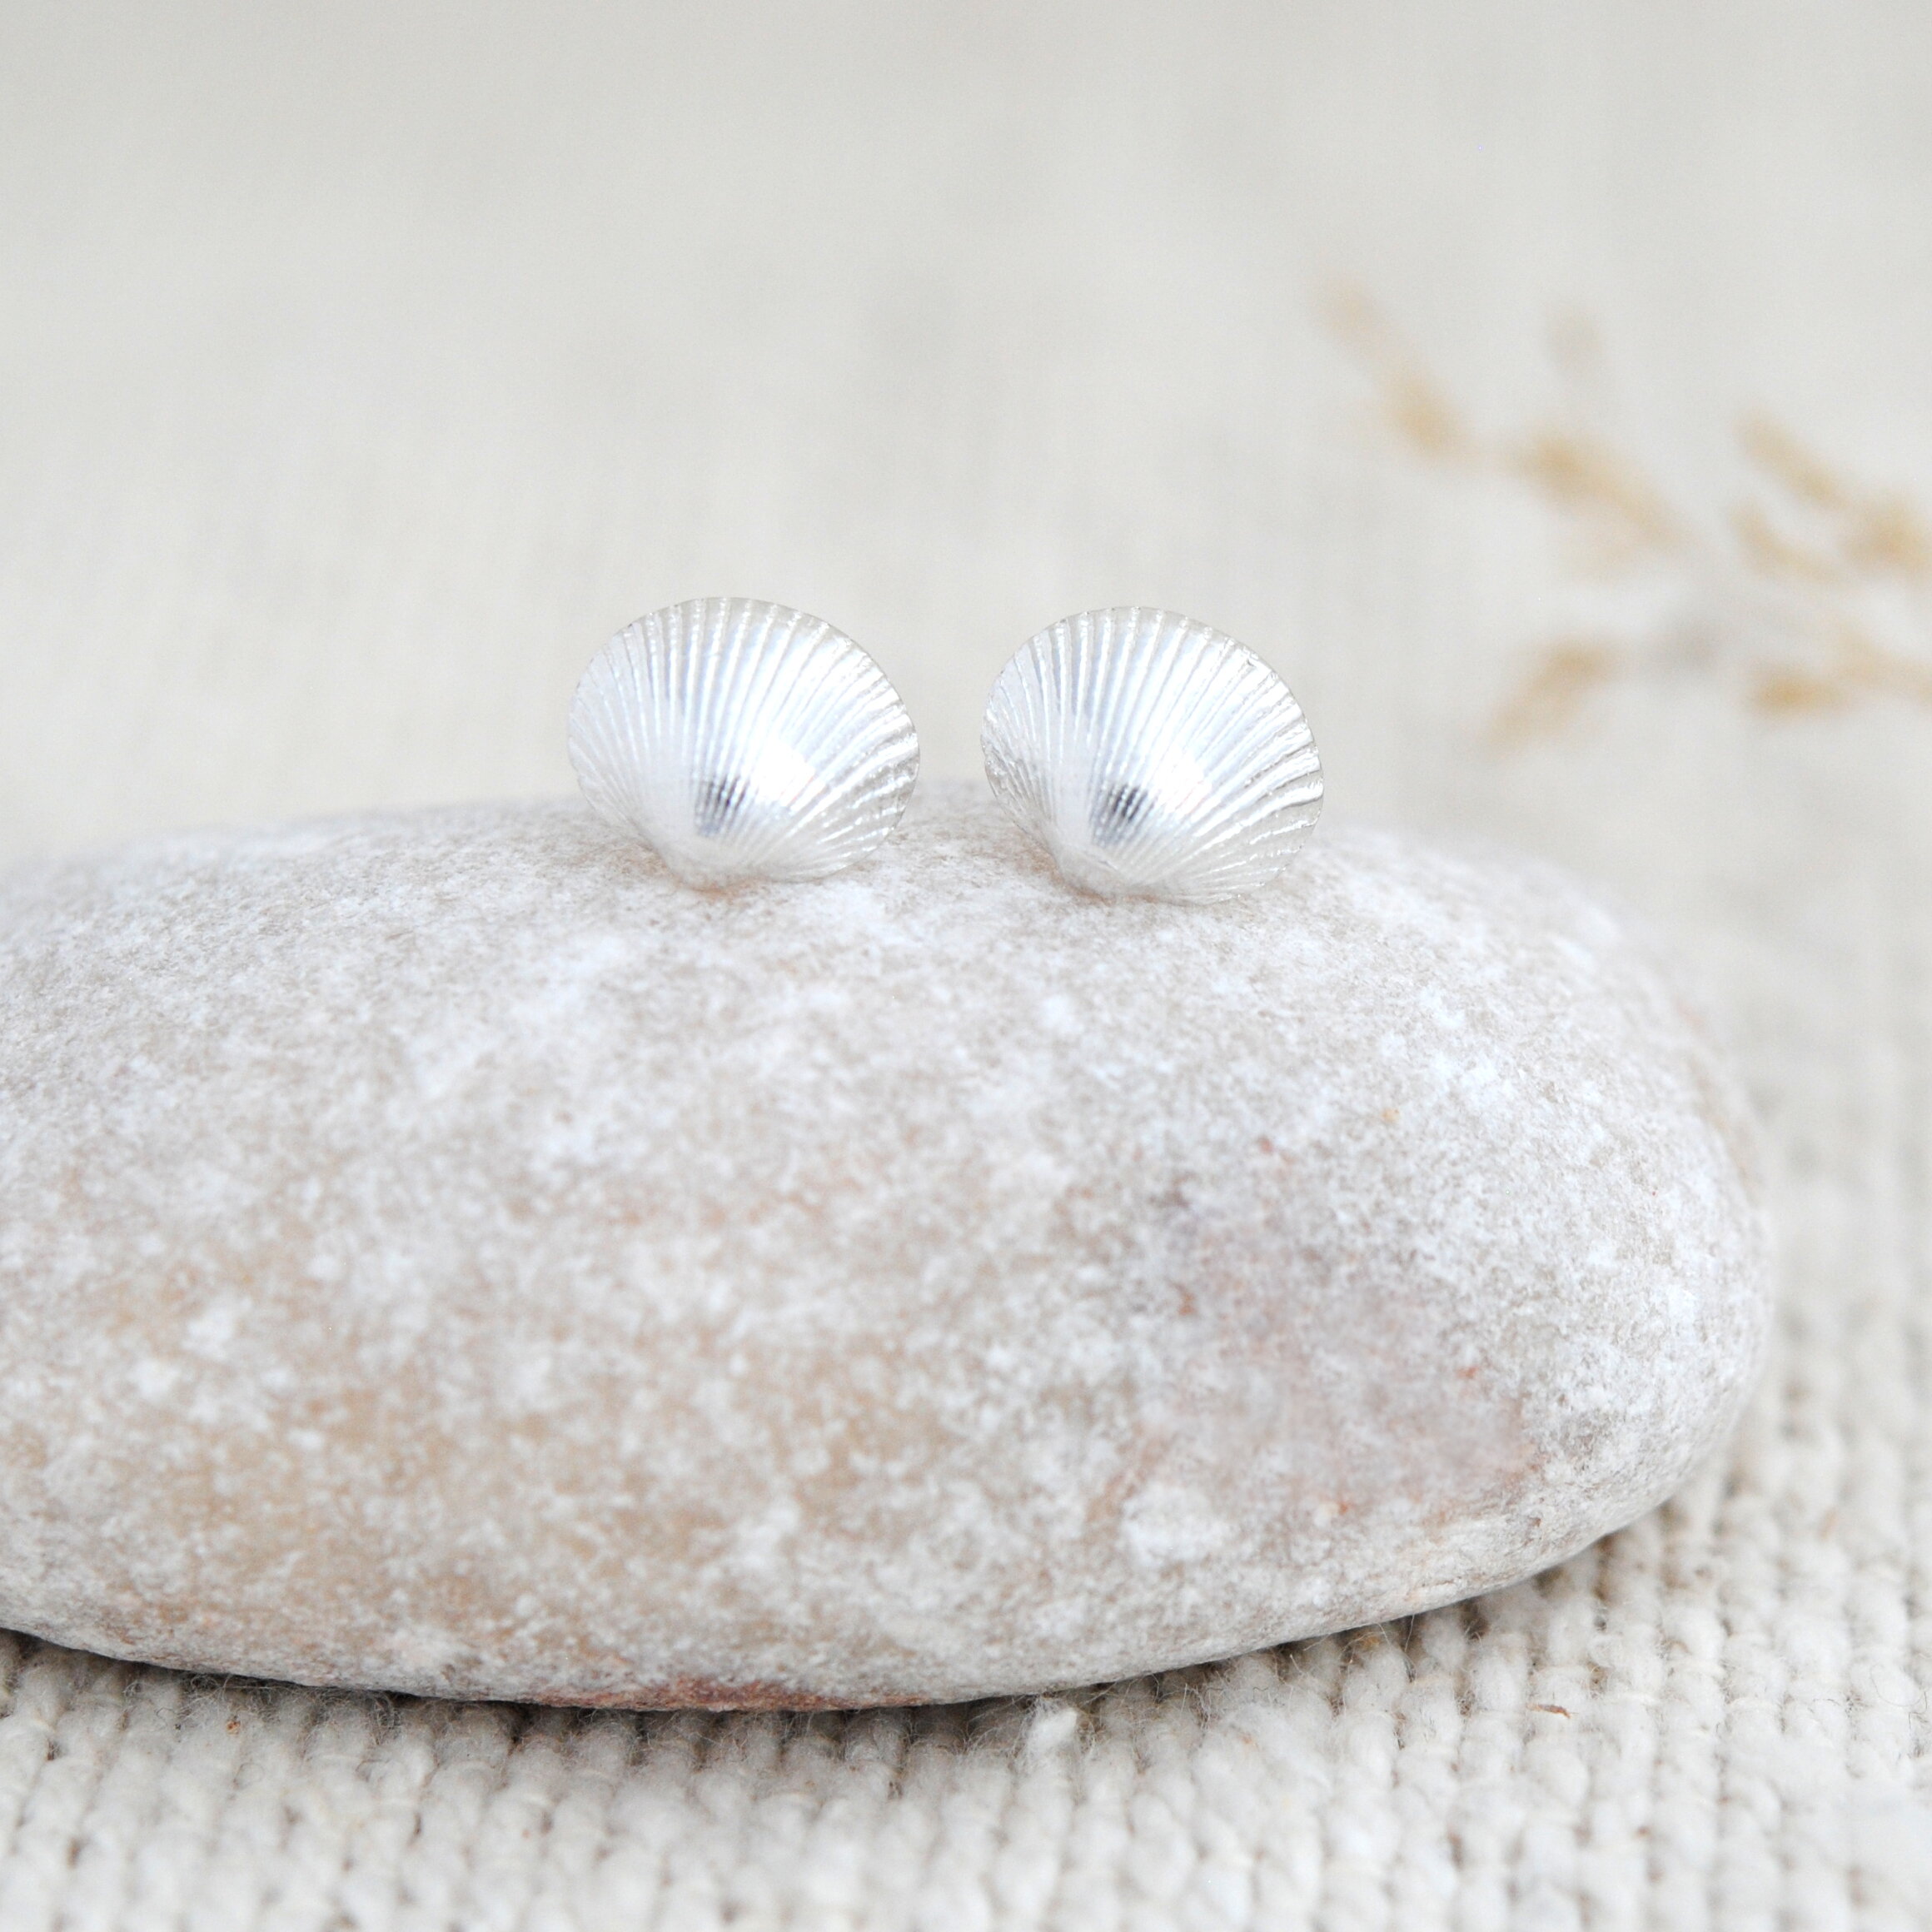 Mini silver seashell earrings